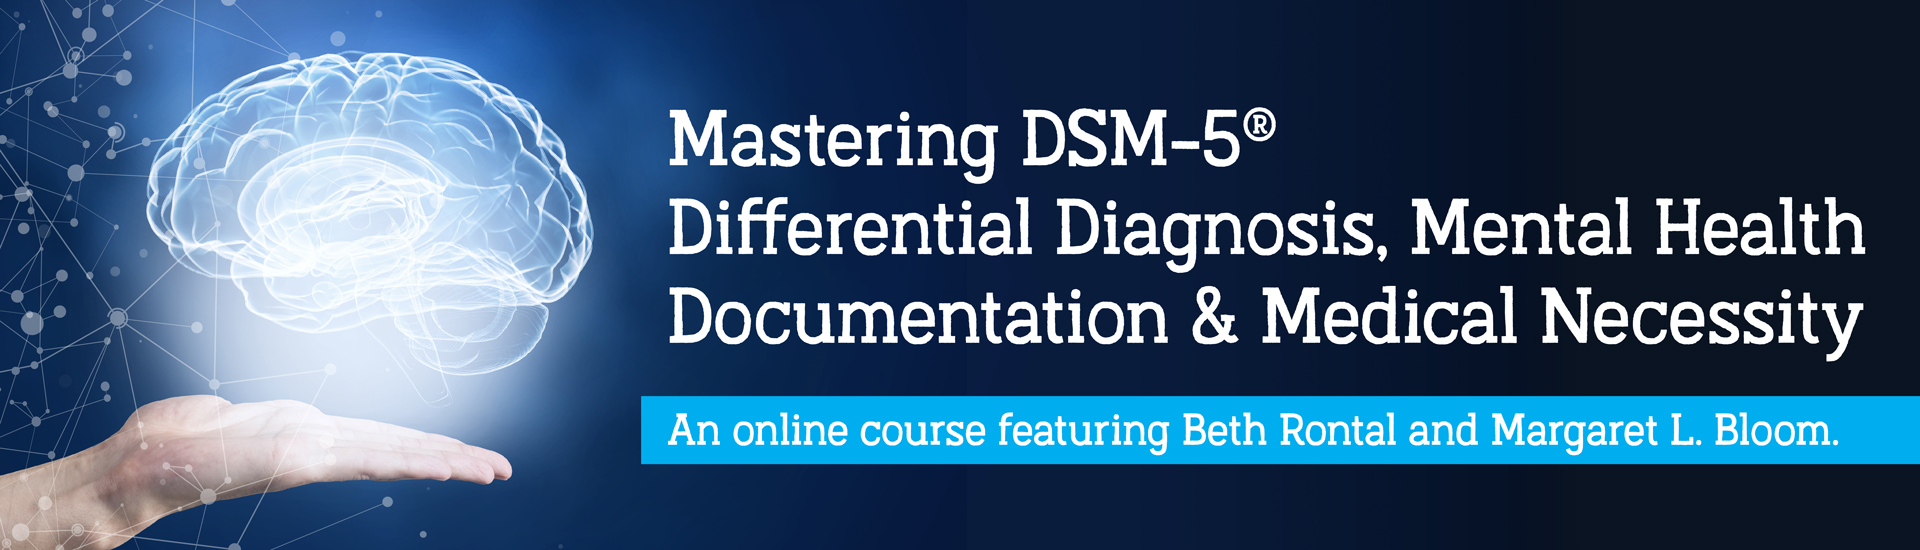 Mastering DSM-5®, Mental Health Documentation & Medical Necessity